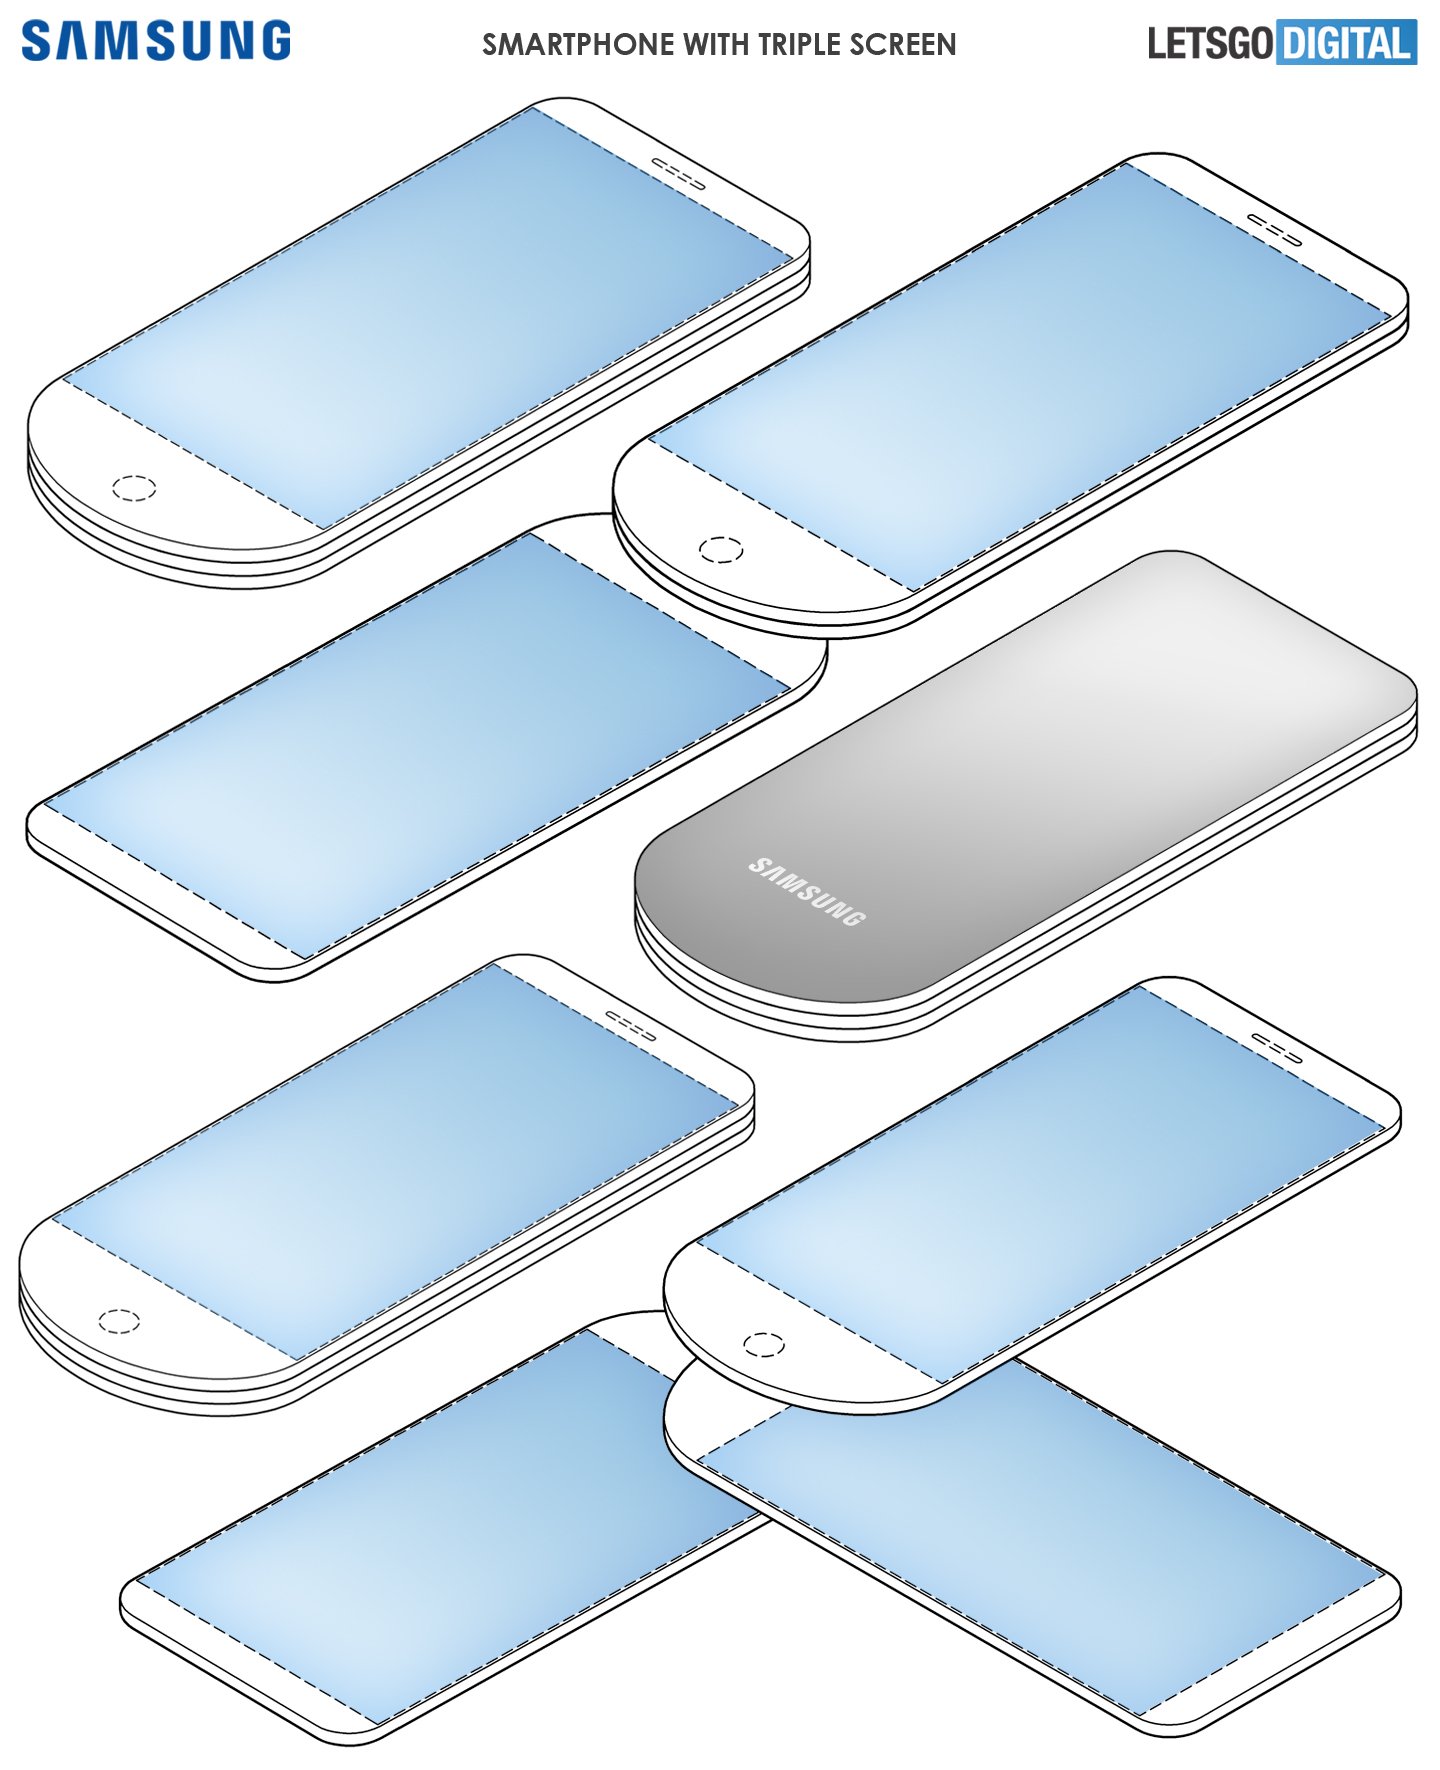 Samsung Triple Display Patent